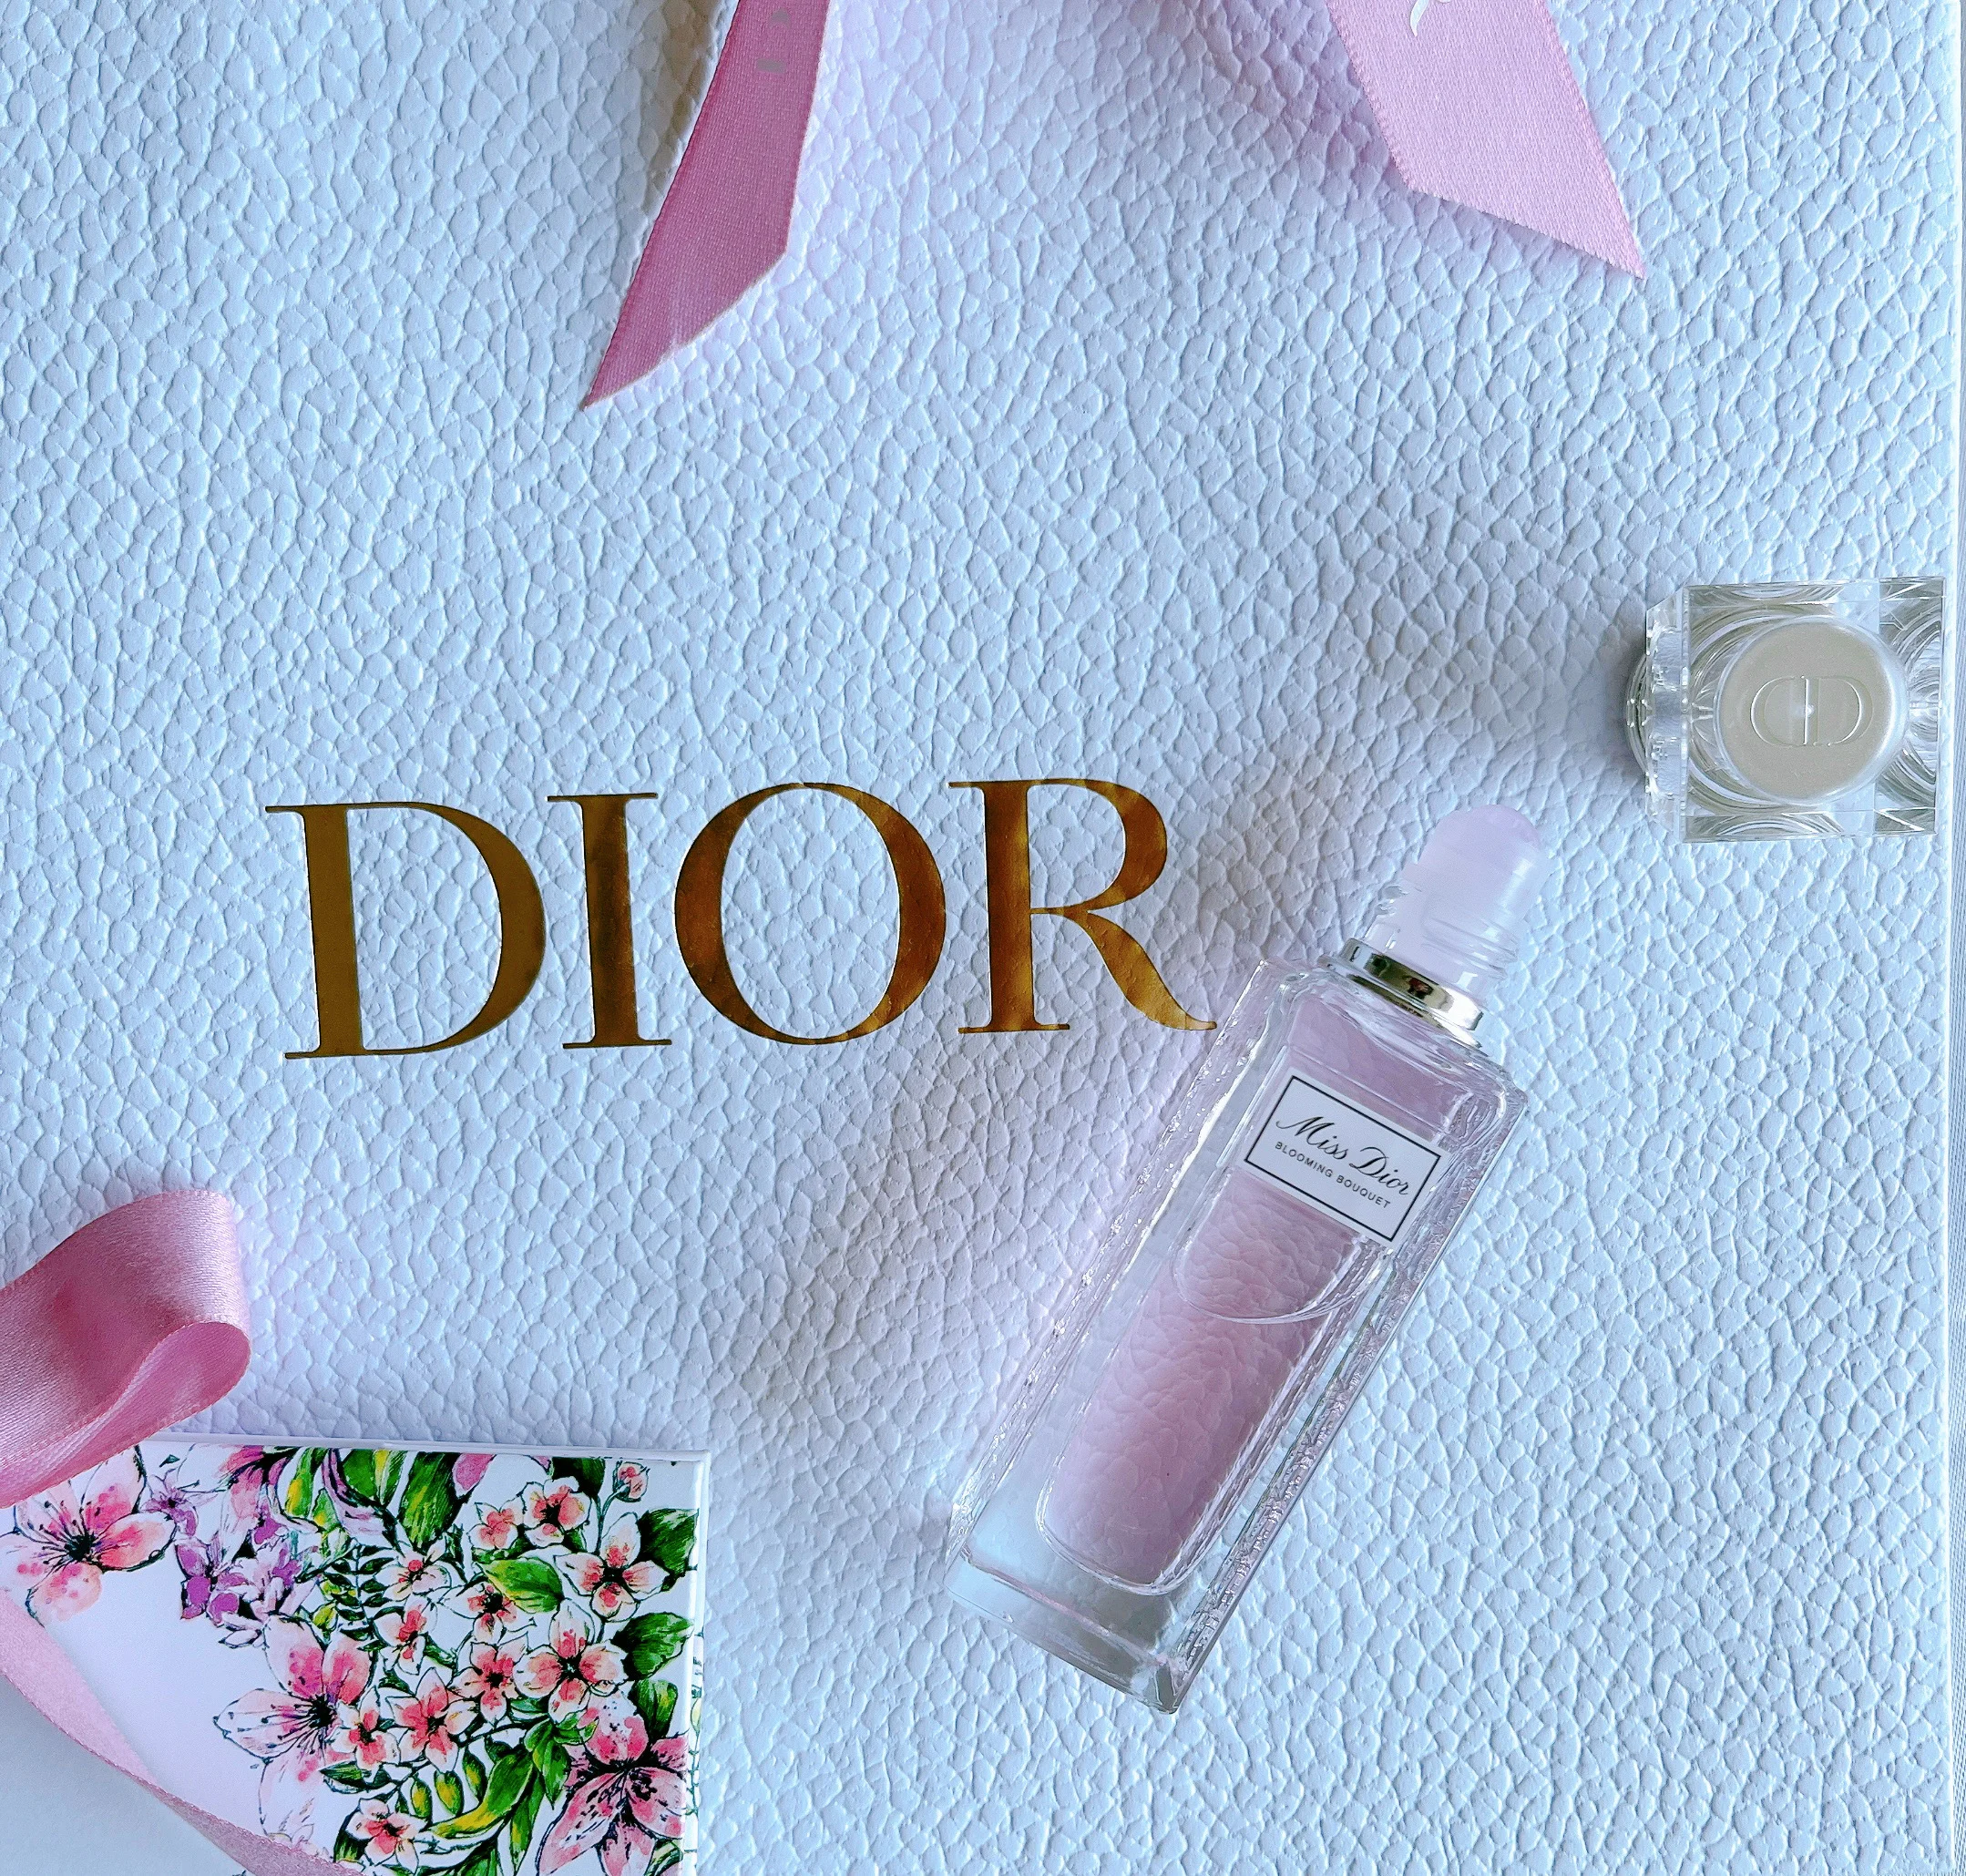 【 Dior 】ミス・ディオールの香りで春をまとう